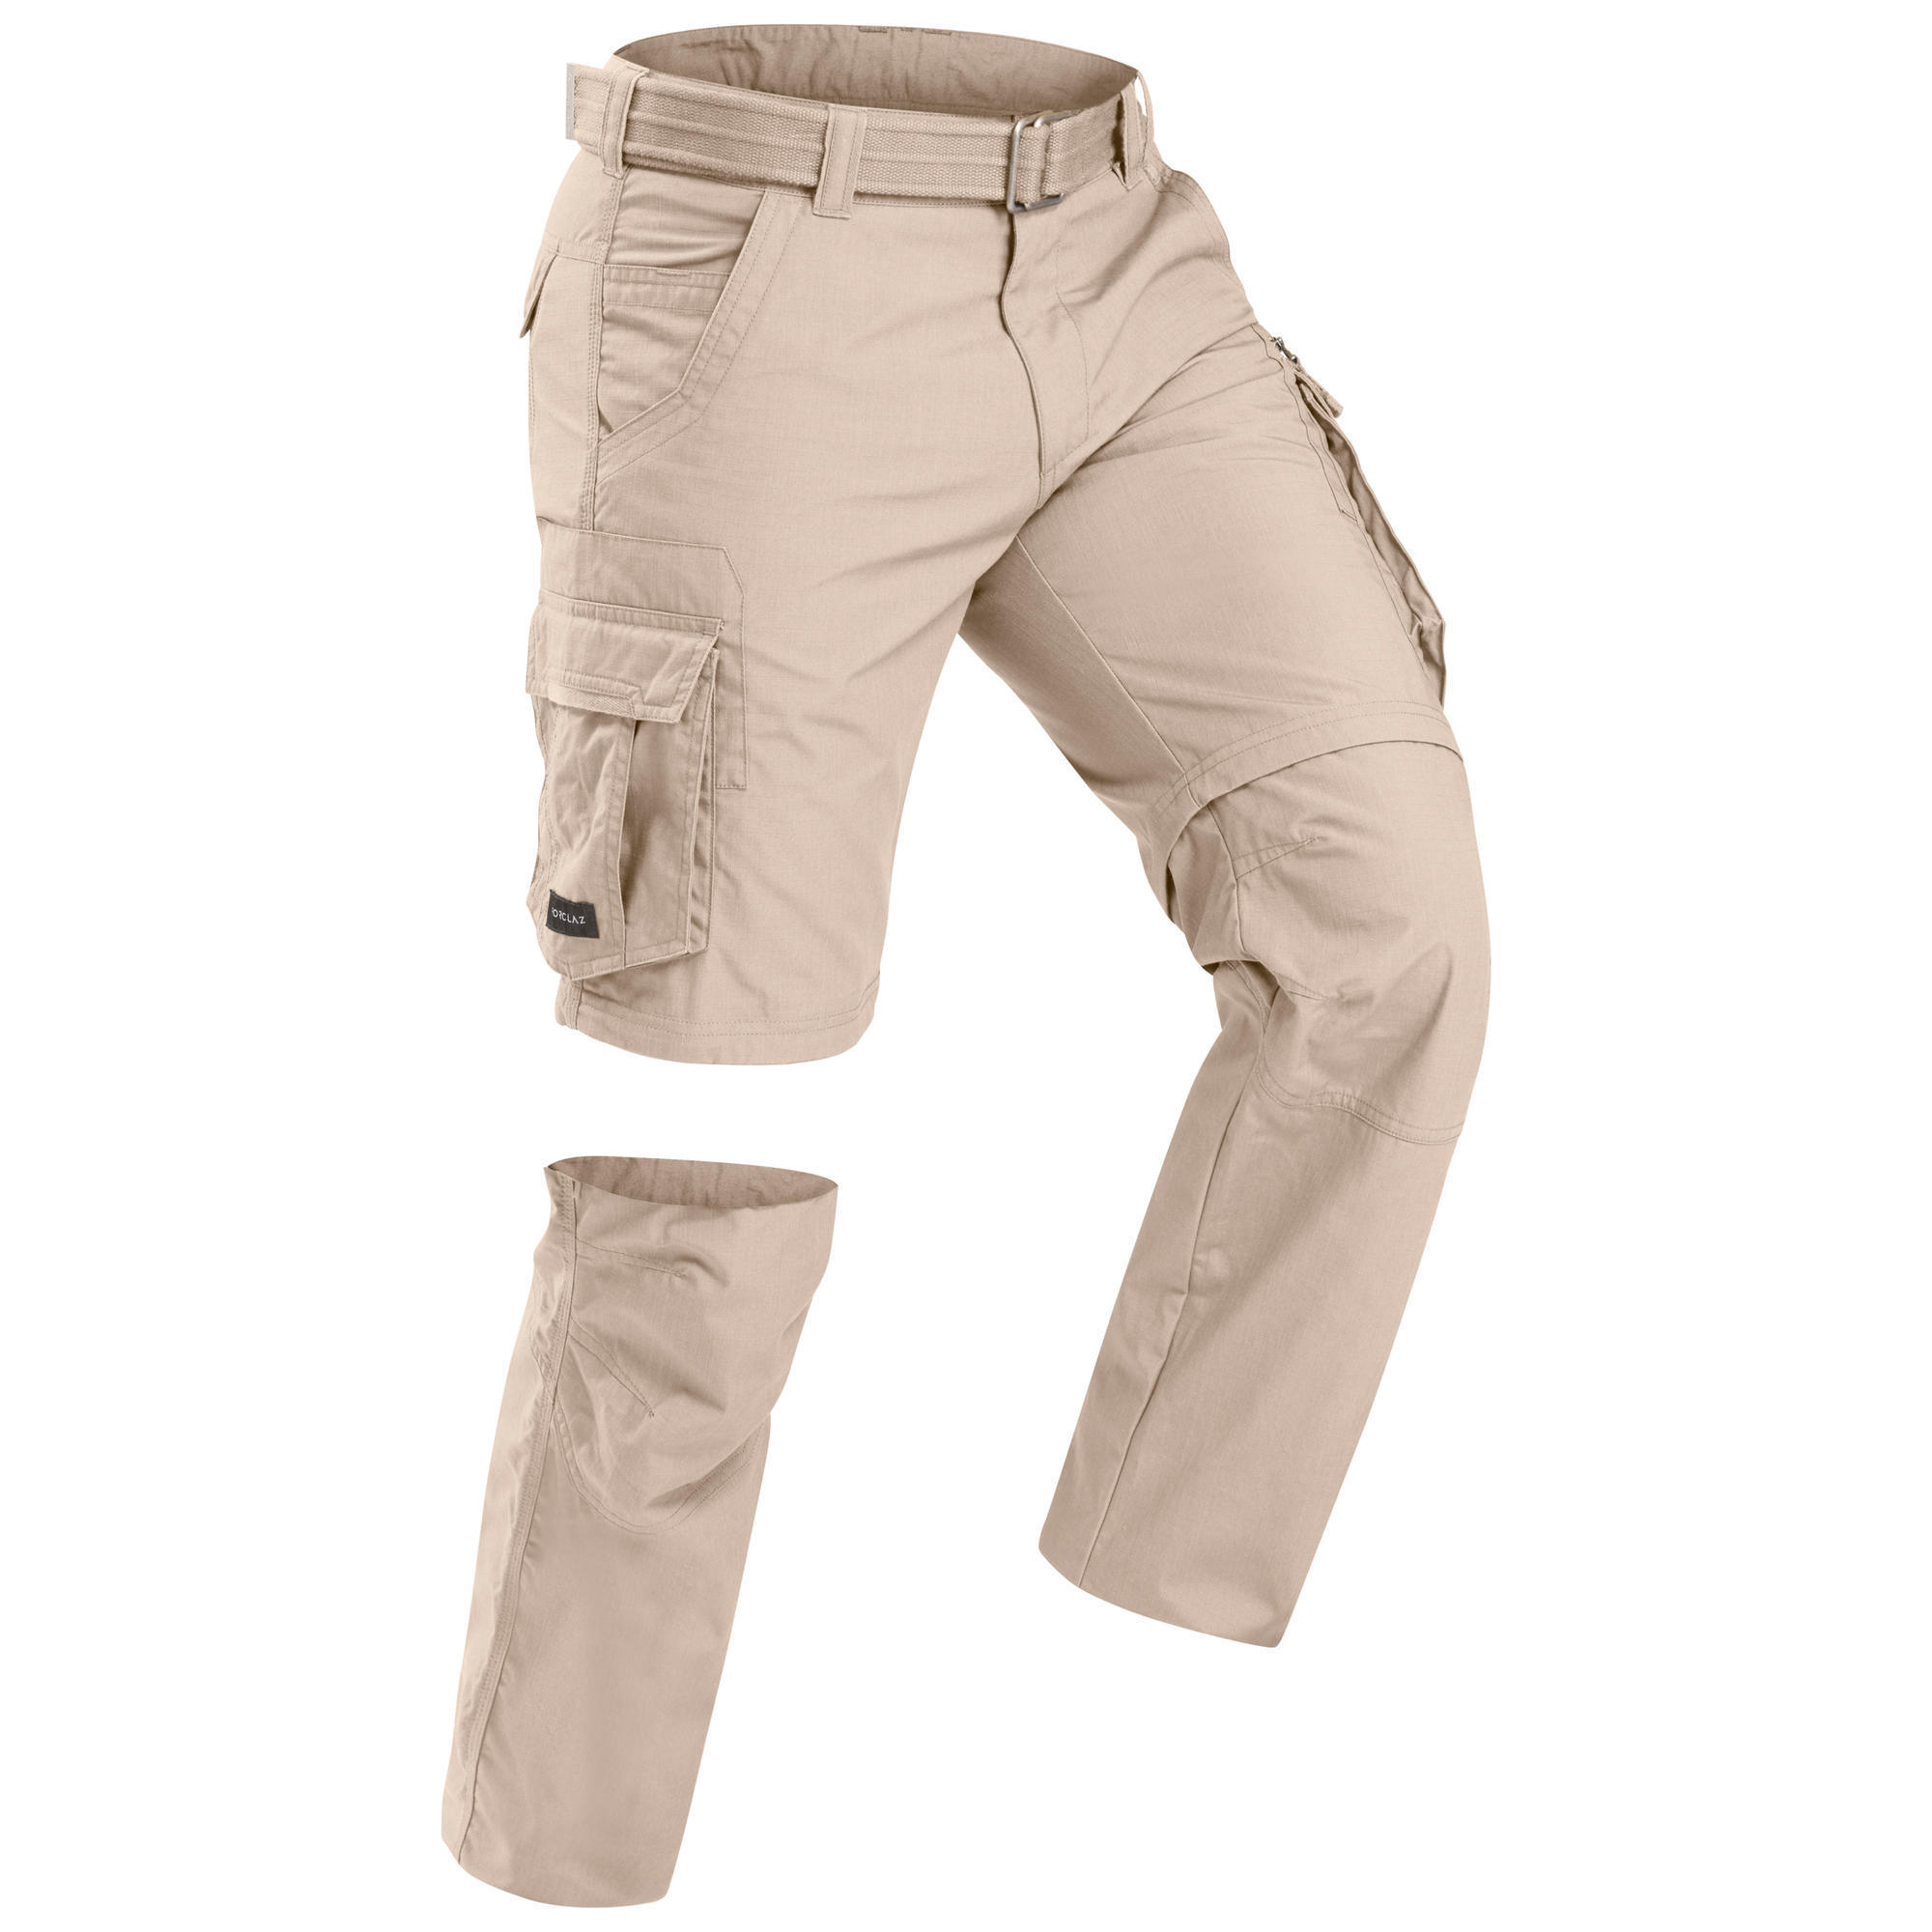 Pantalon de survêtement Panzeri Hobby l navy pantsurvt Bleu marine Taille :  L - Pantalons de sport - Achat & prix